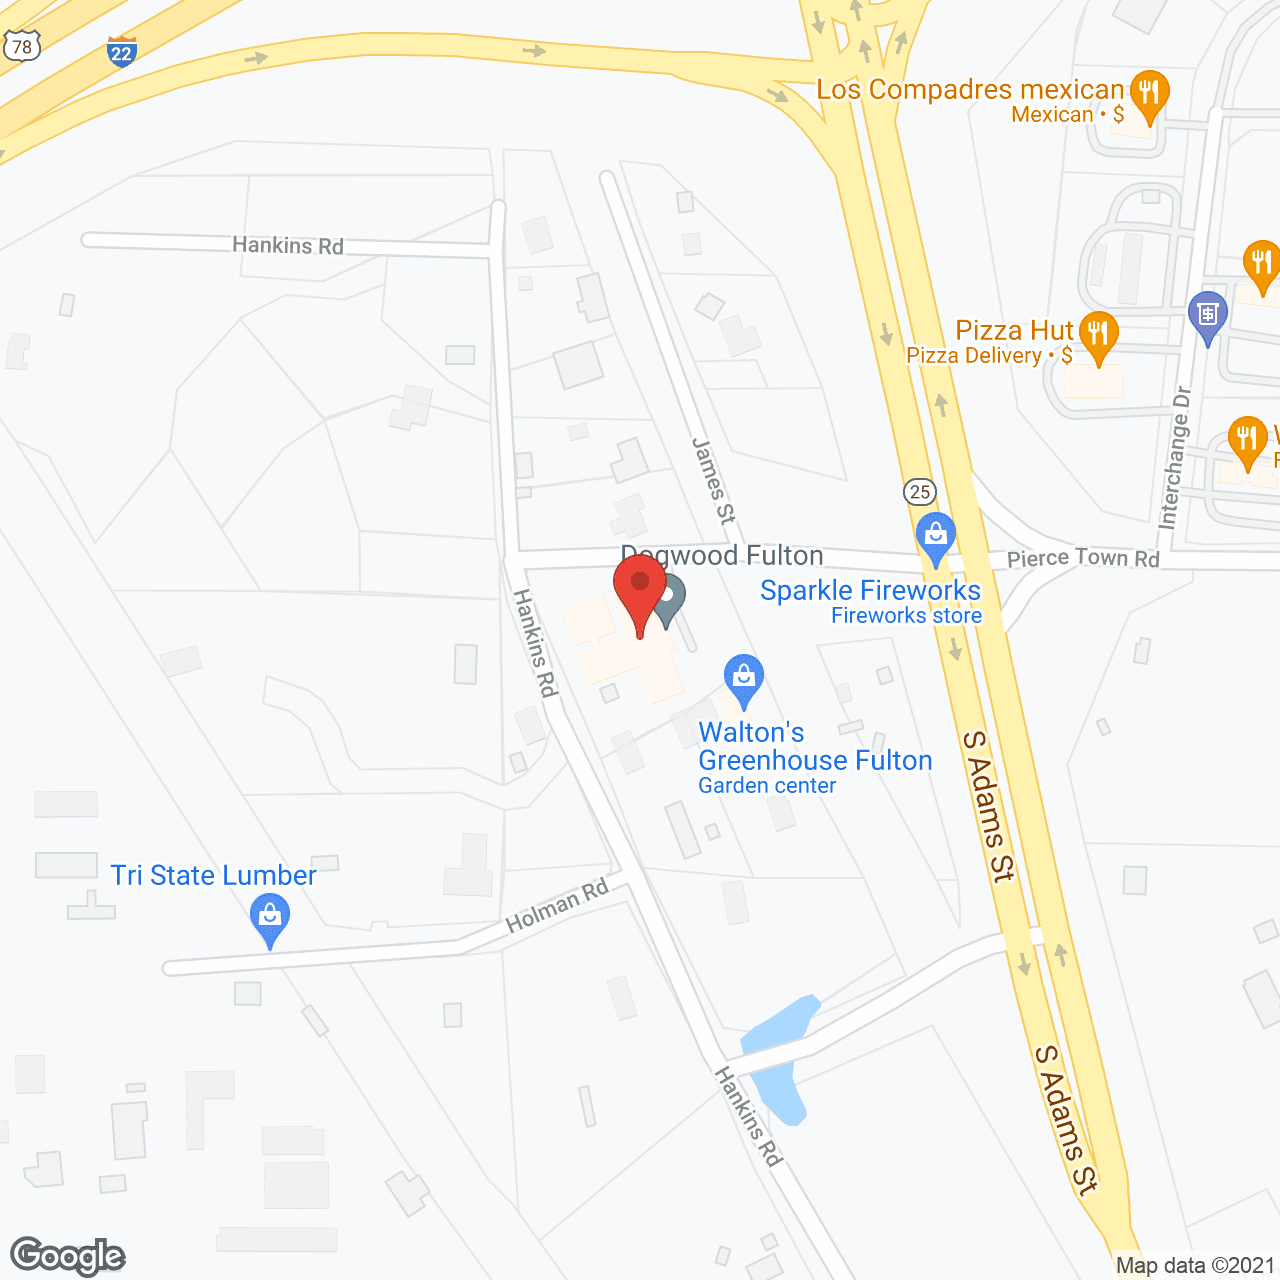 Dogwood Fulton, LLC in google map